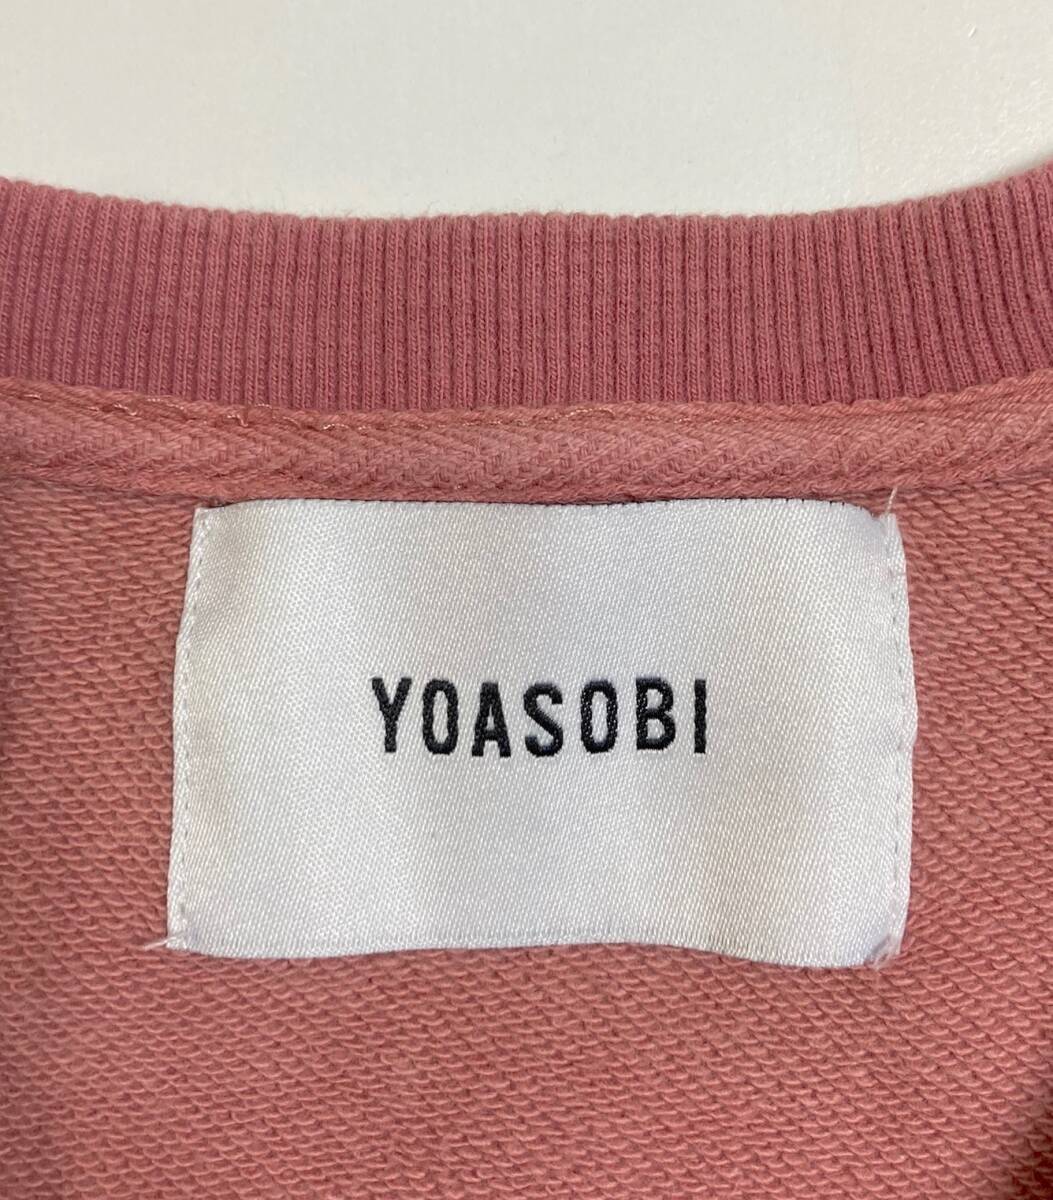 YOASOBI 初期グッズ スウェット M クルーネックプルオーバー crewneck pullover PINK ピンクの画像3